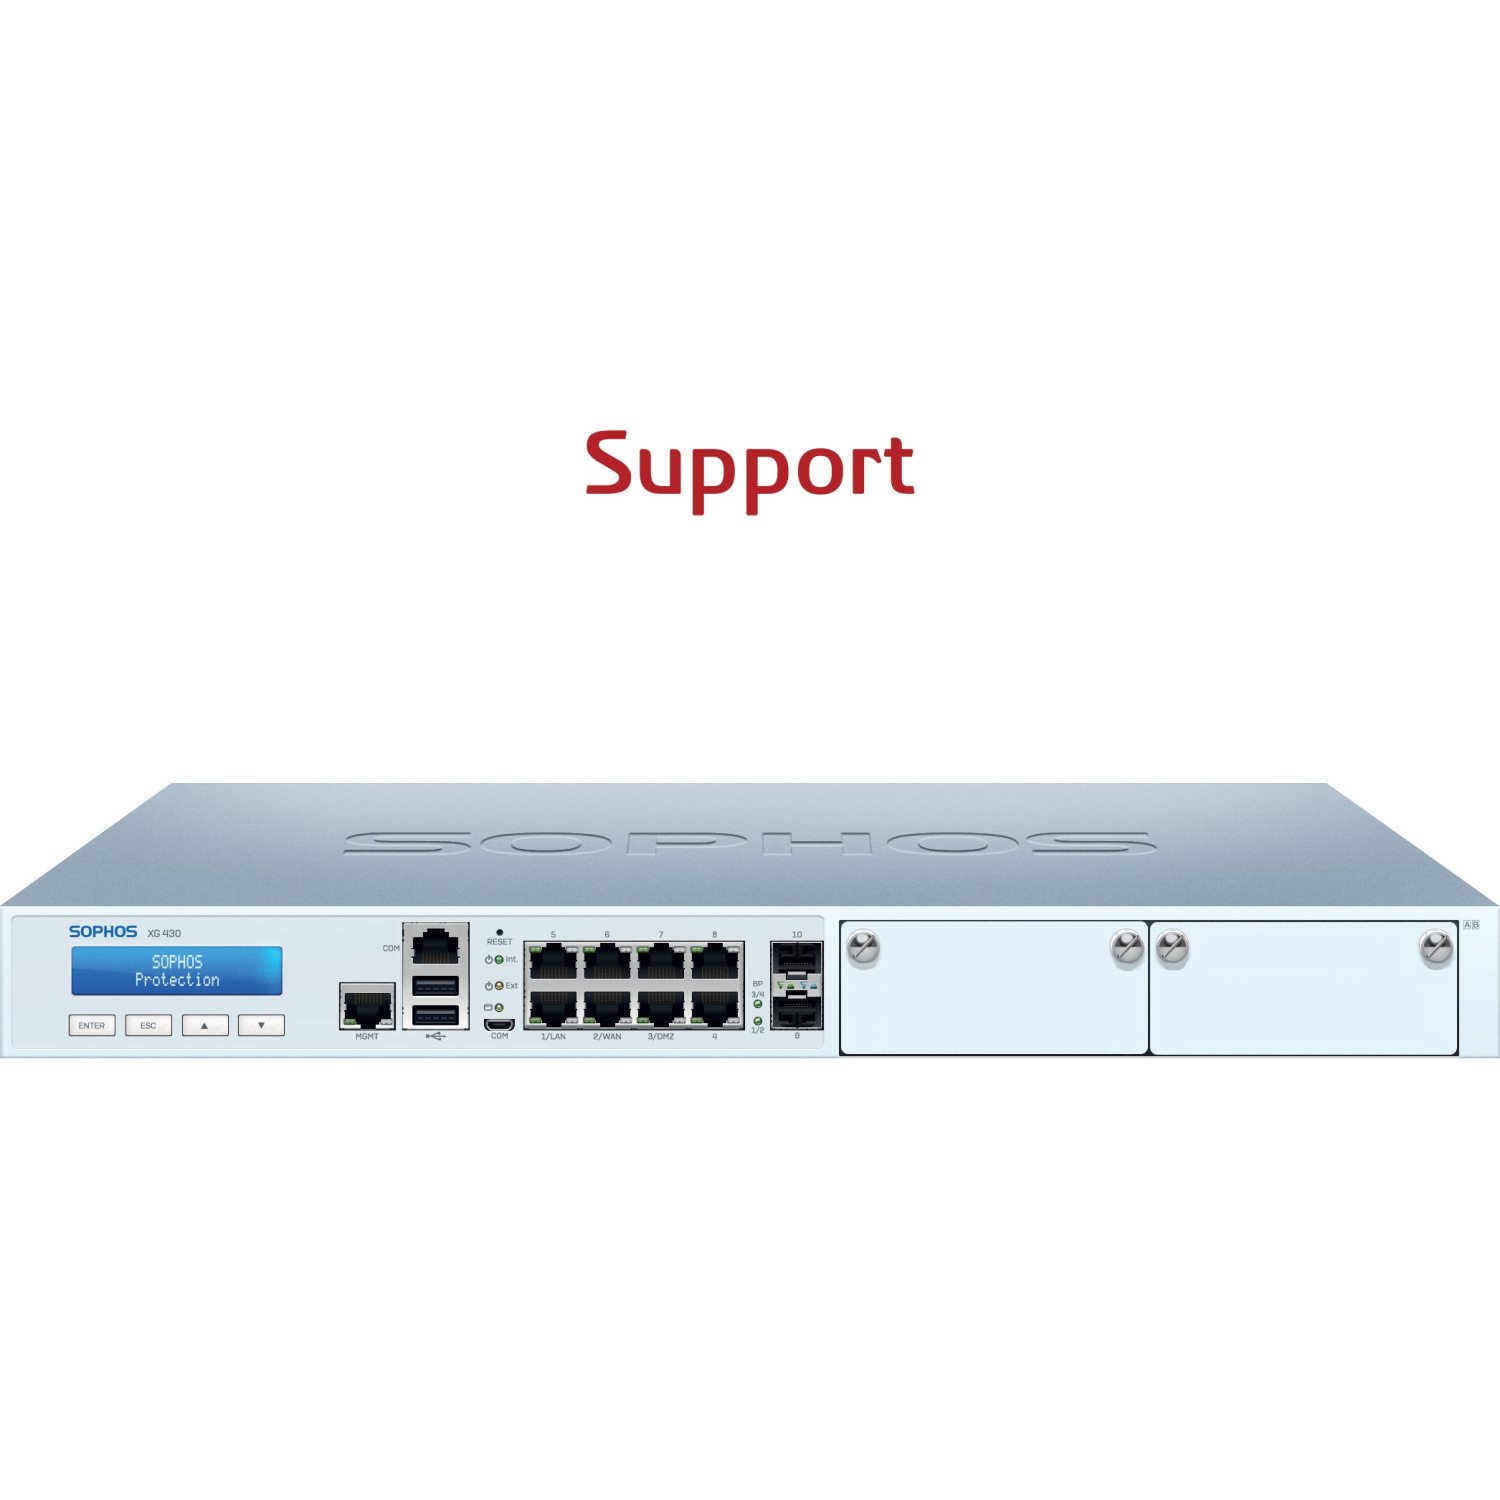  XG / XGS FireWall Support pour Firewall Sophos XG 450